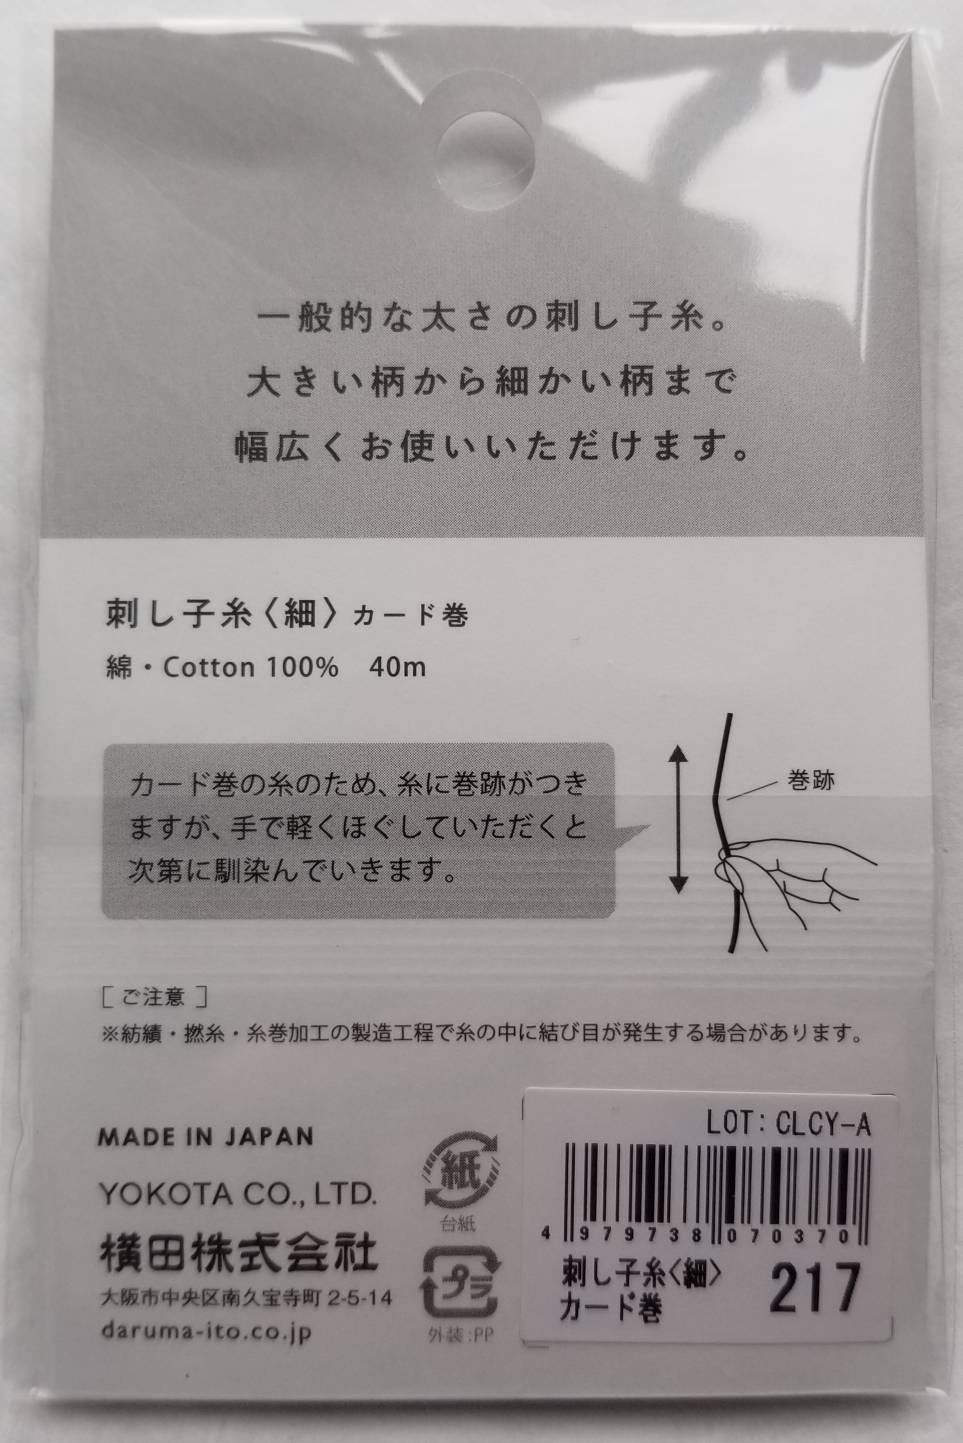 Daruma #217 WHITE GREY Japanese Cotton SASHIKO thread 40 meter card 20/4